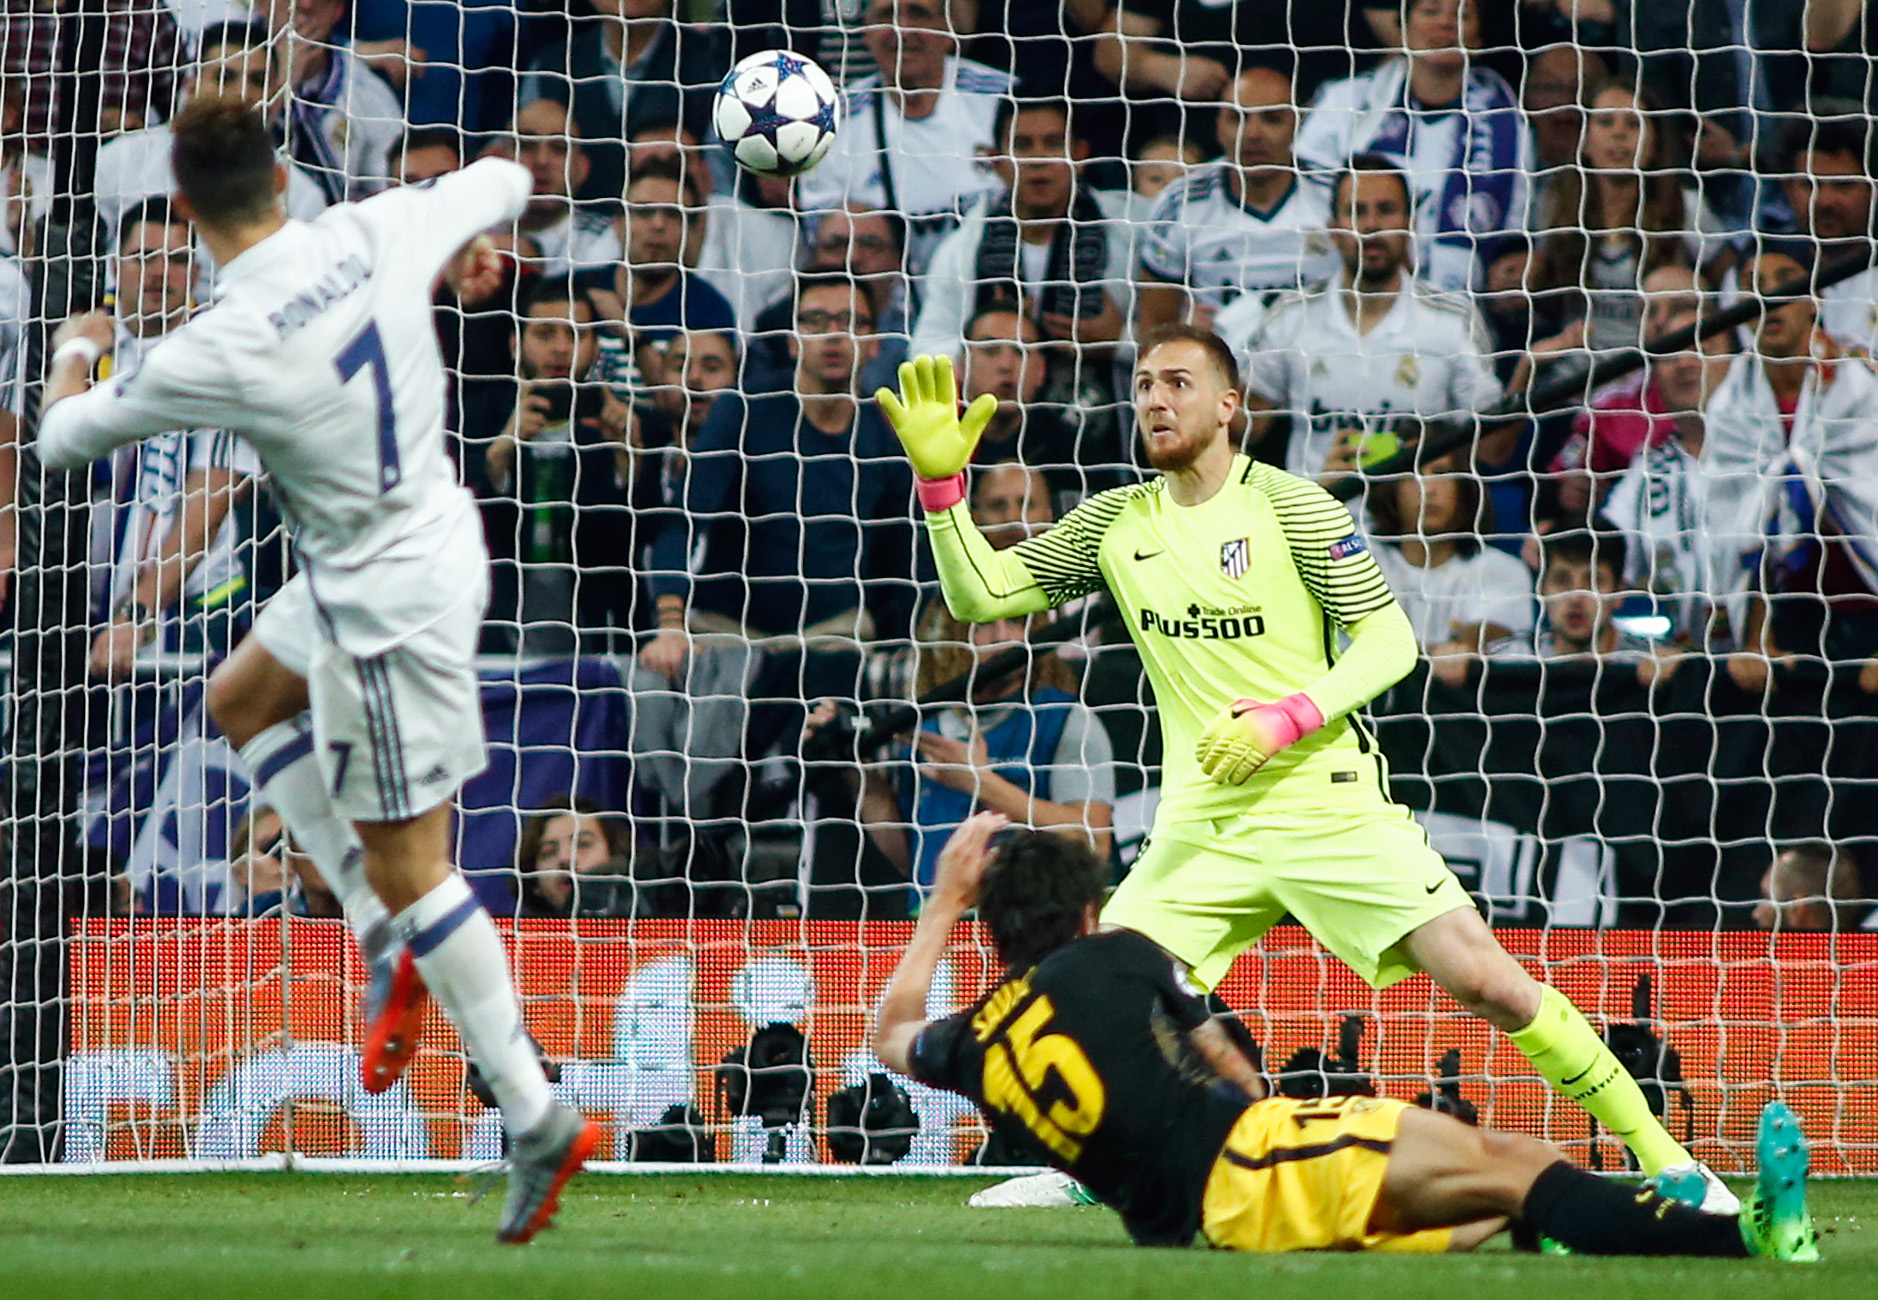 Cristiano Ronaldo Hatrick Goal - Real Madrid vs Atletico Madrid 3-0 UCL  02/05/2017 HD animated gif